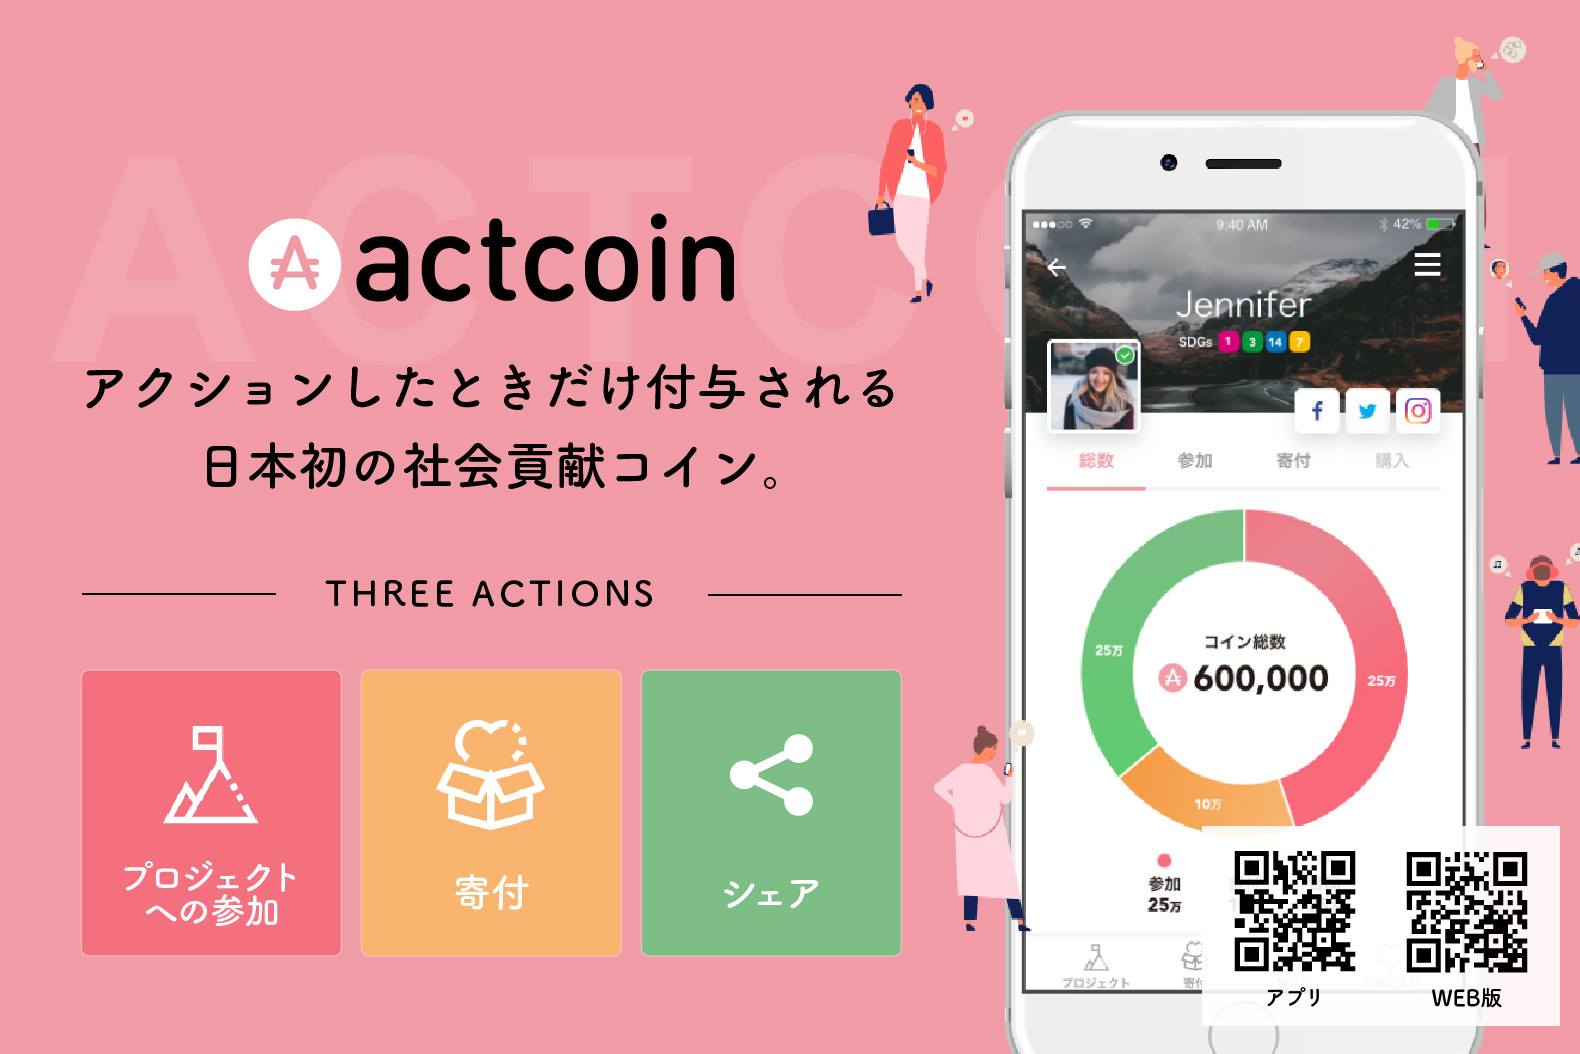 【actcoin】1,000人の仲間を募るクラウドファンディングにご協力ください！